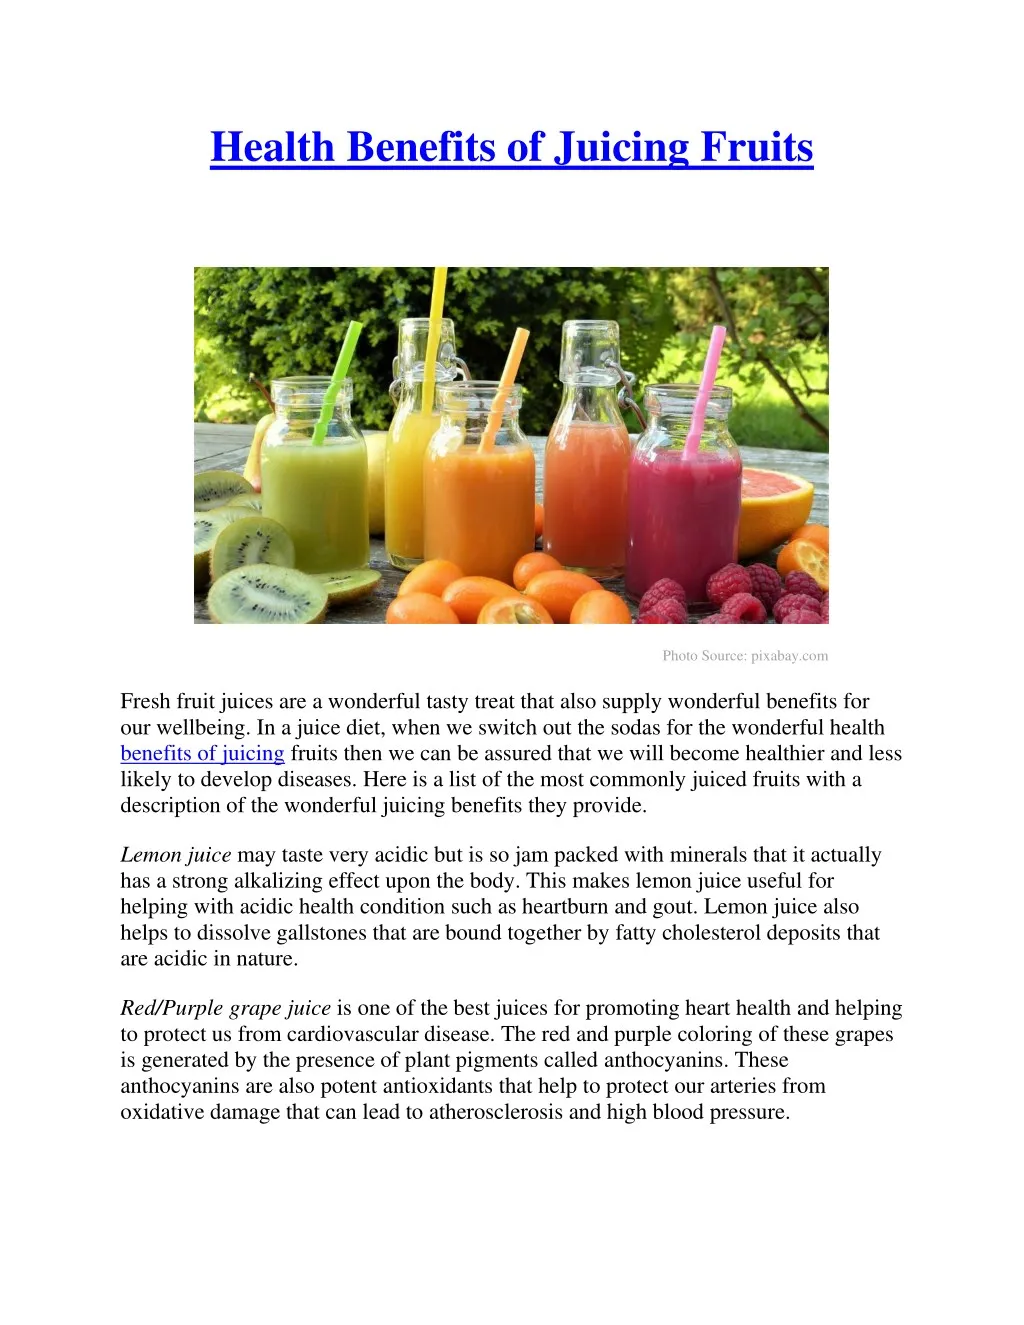 health benefits of juicing fruits